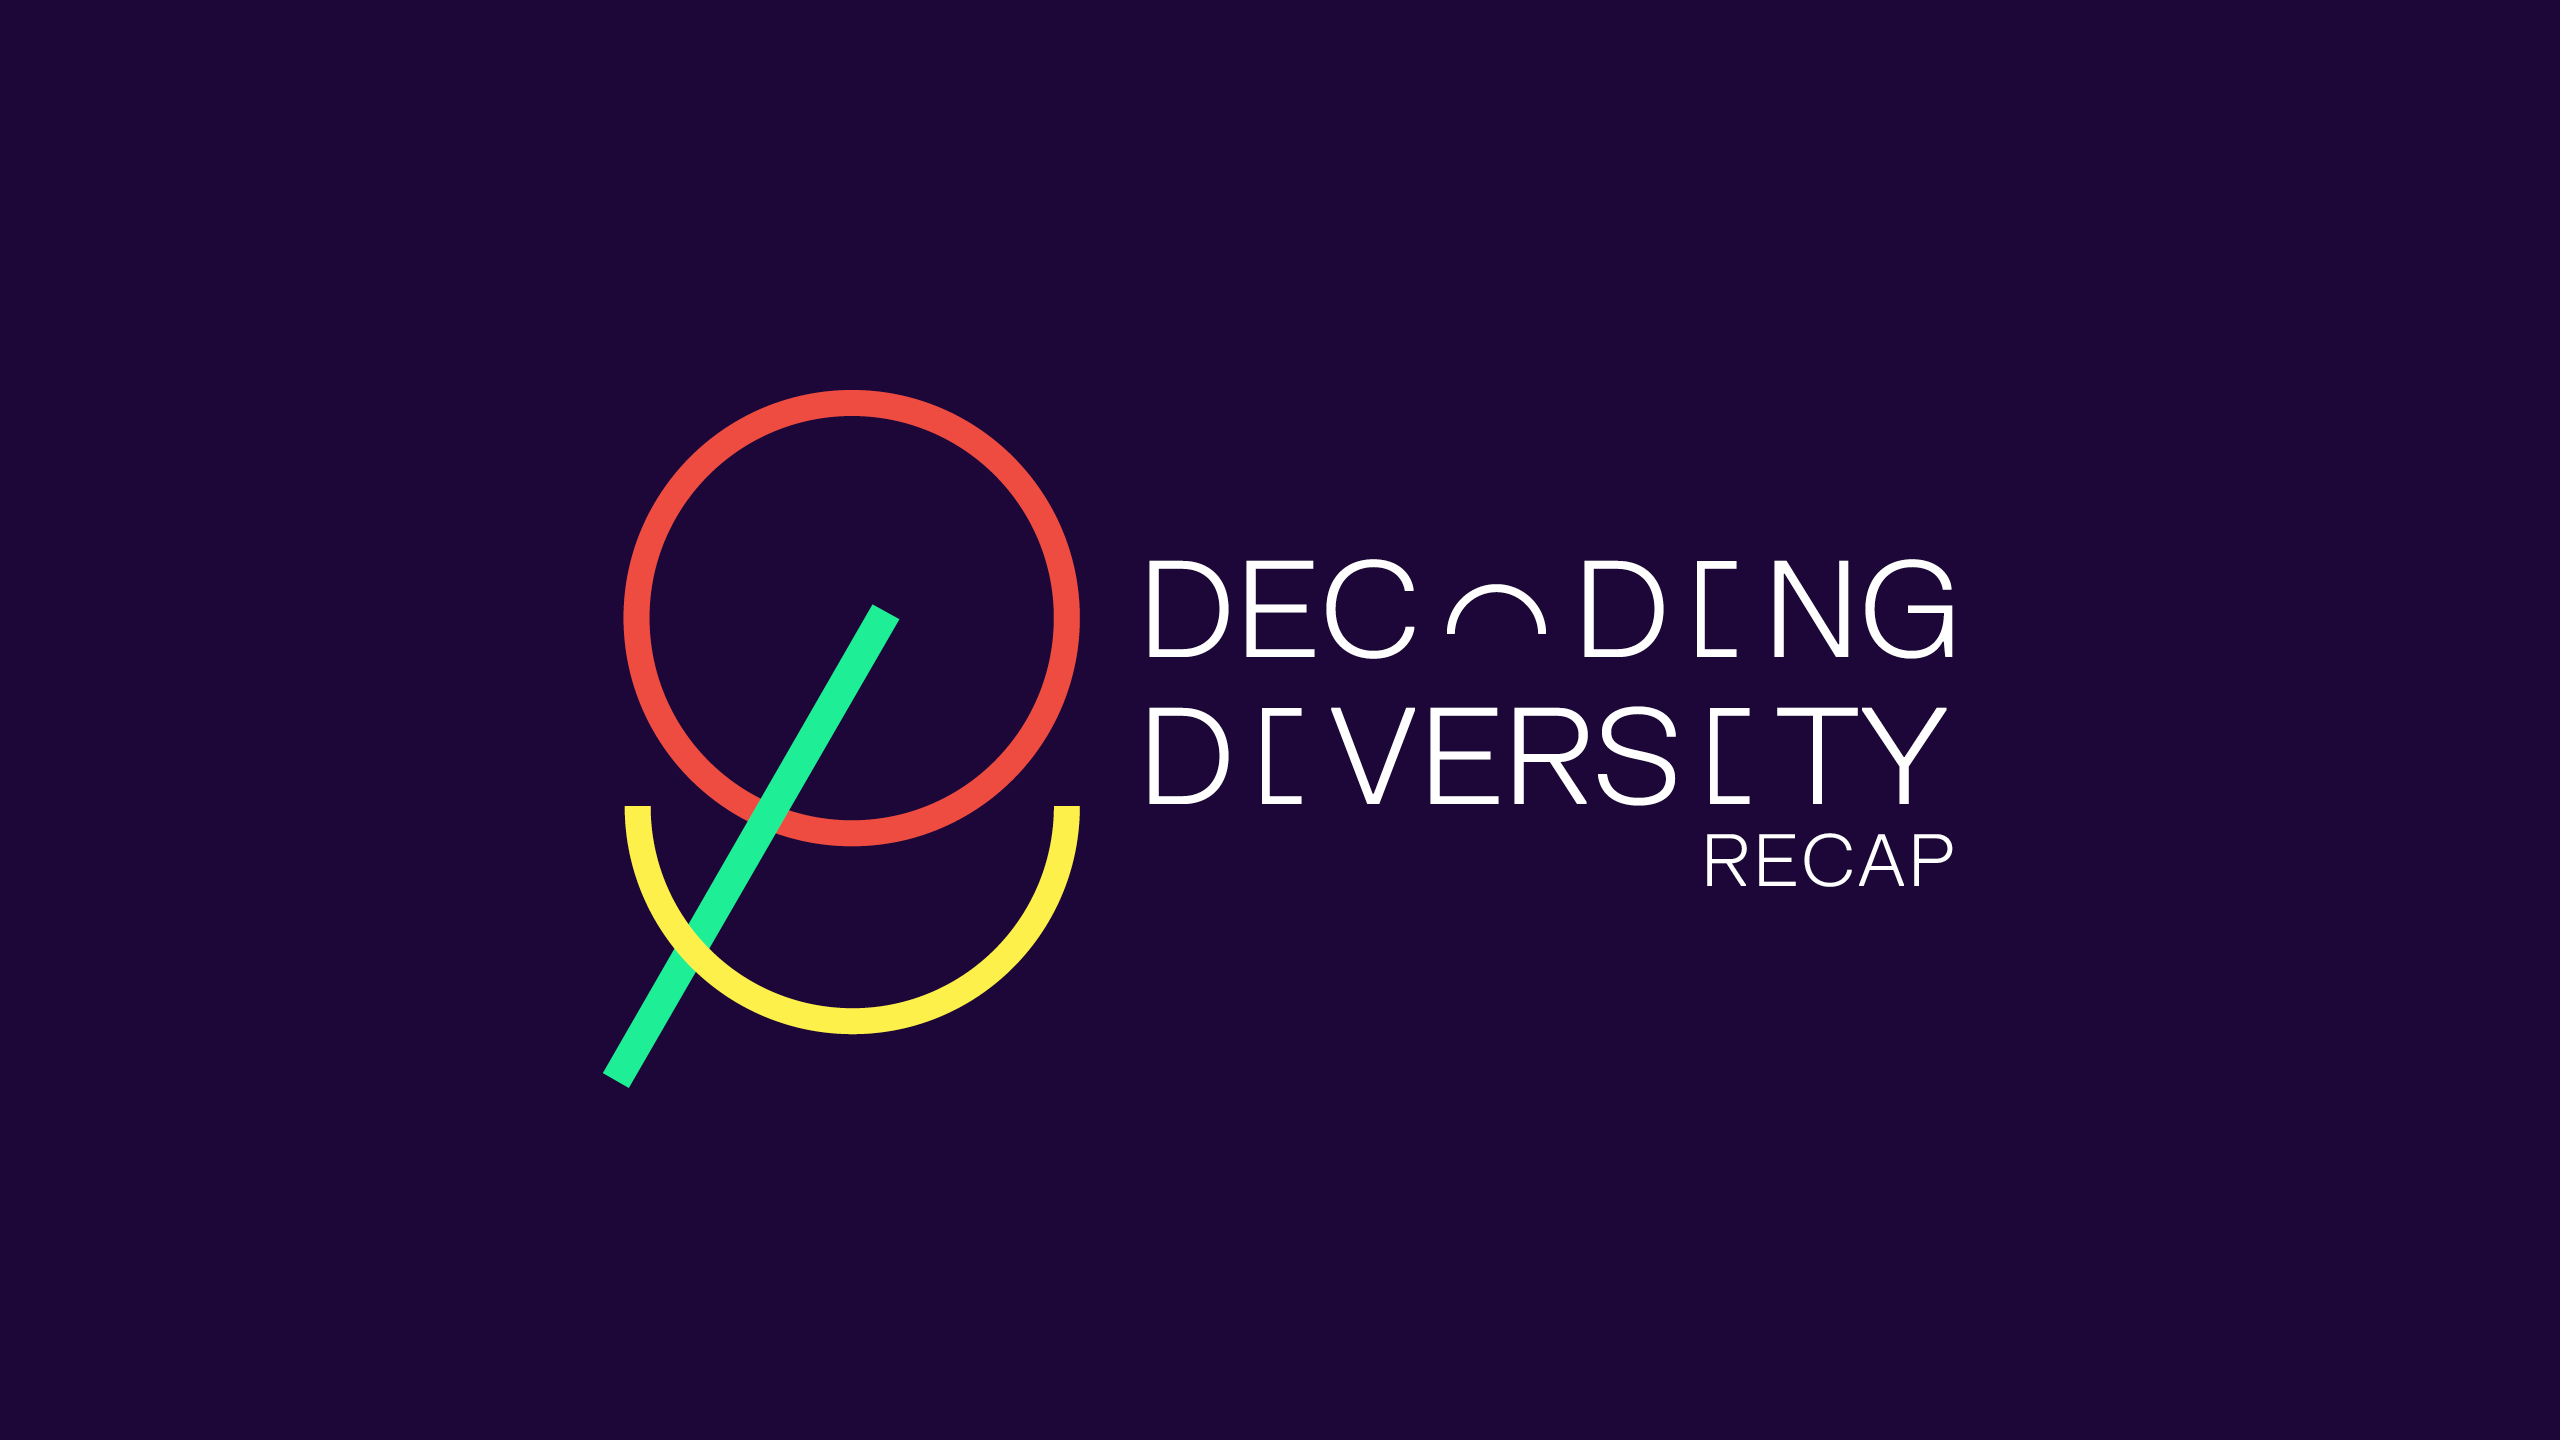 #DecodingDiversity: What does diversity mean to us? 